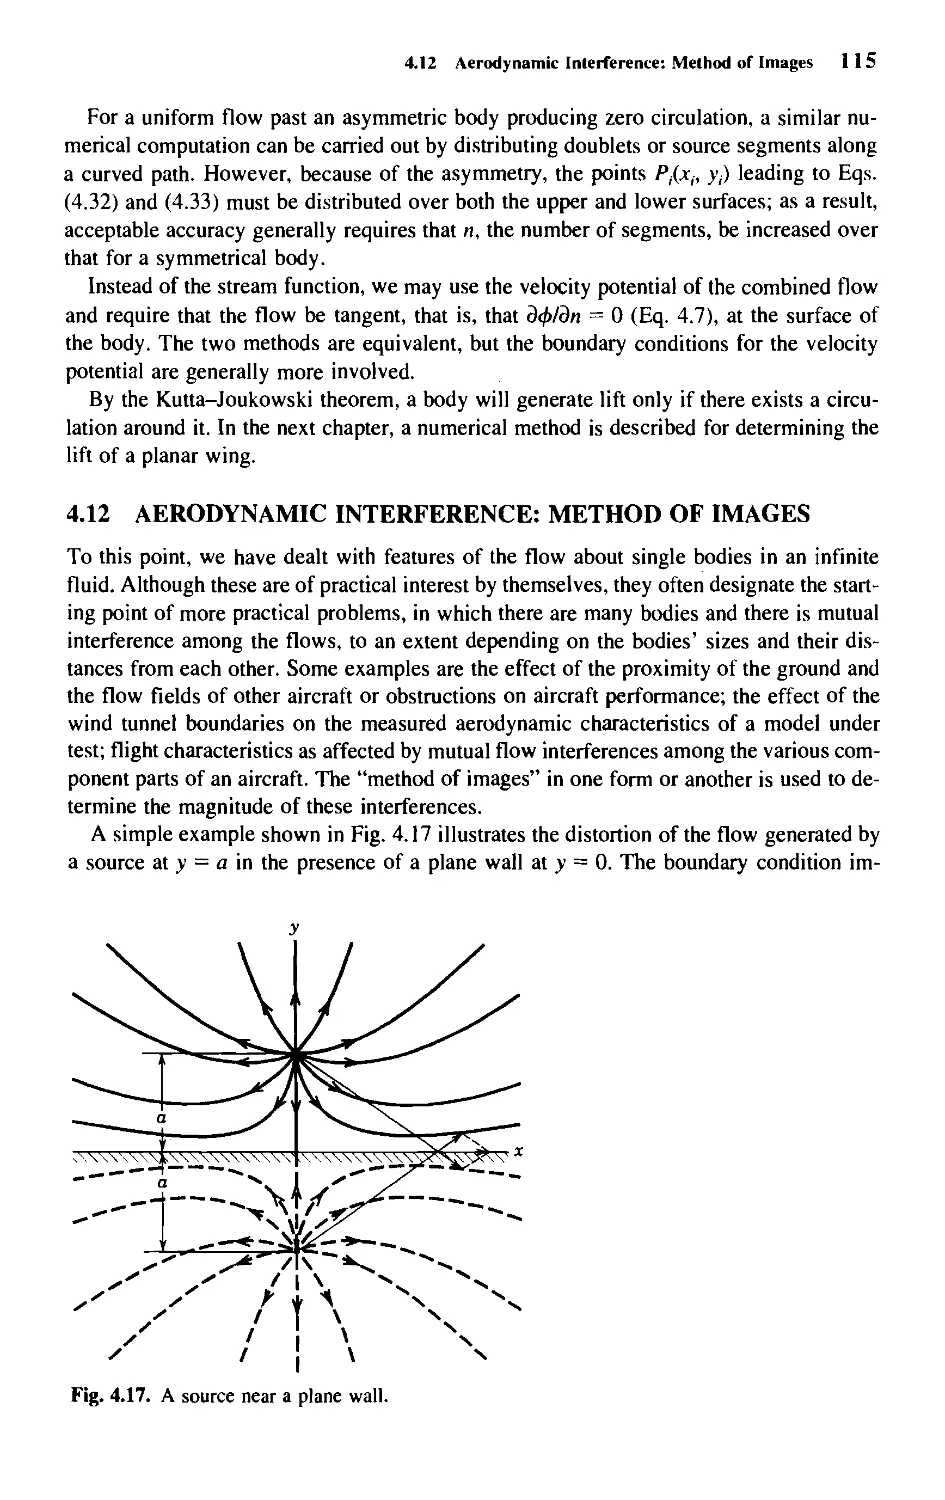 4.12 - Aerodynamic Interference: Method of Images